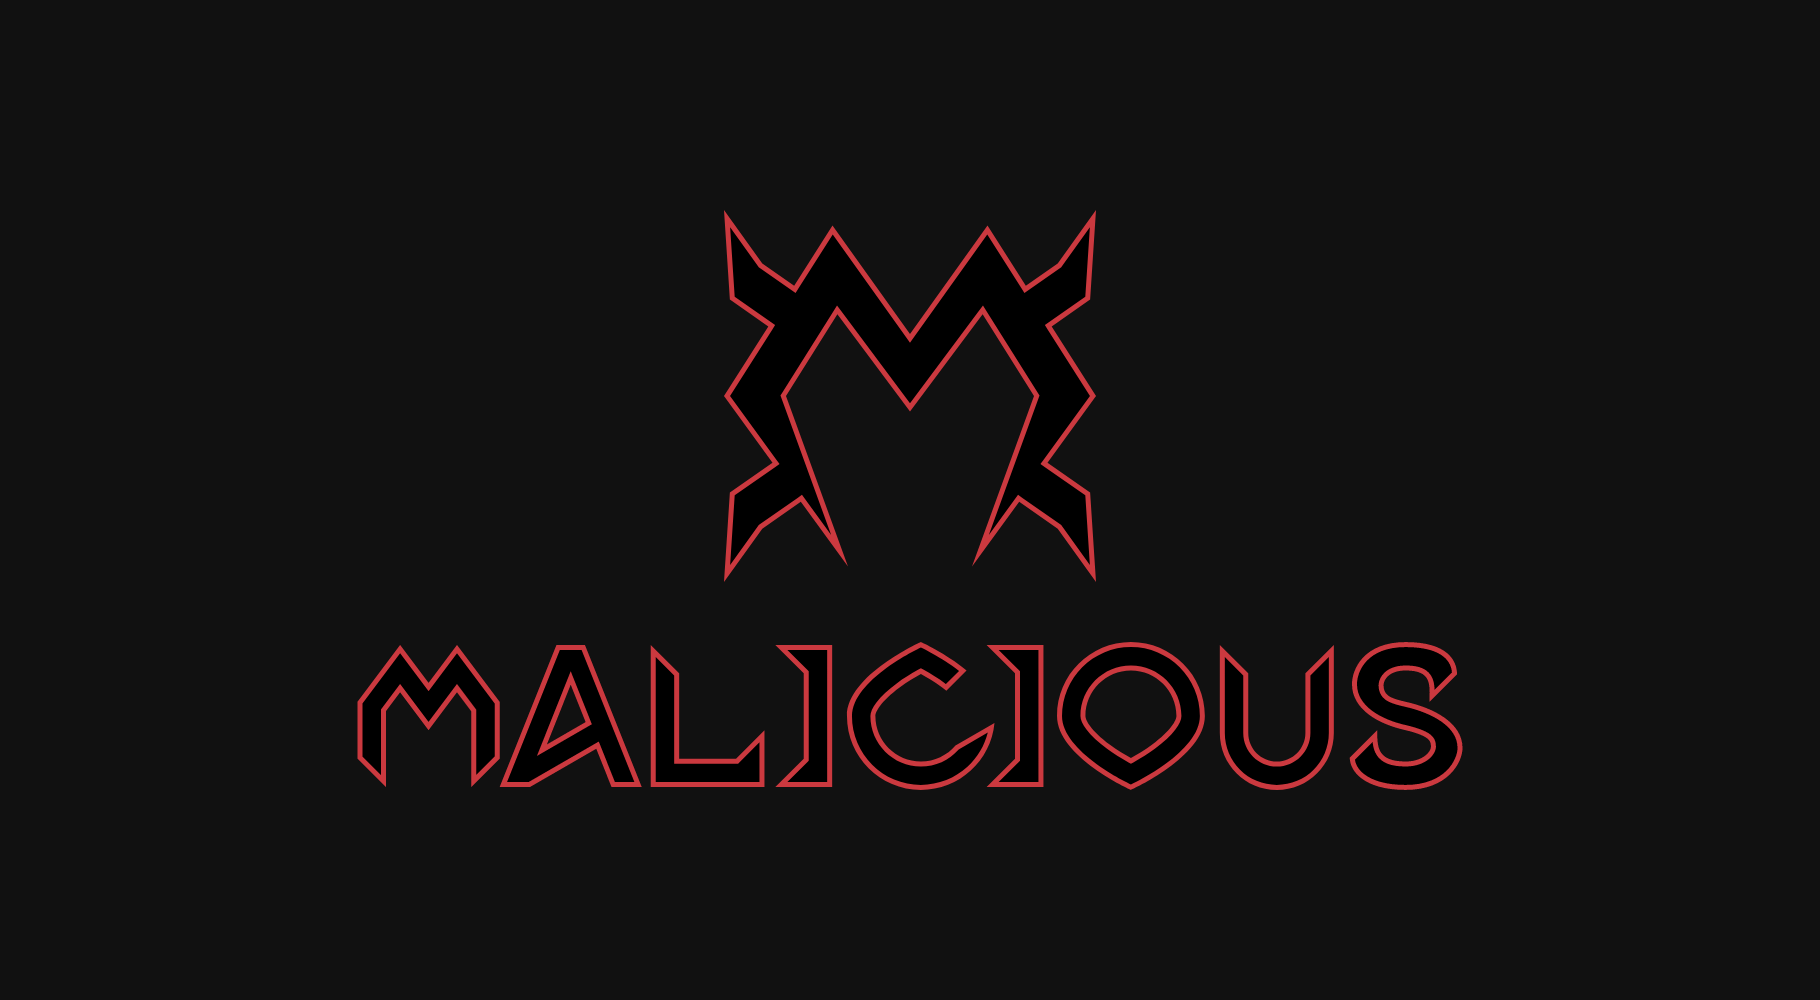 Malicious logo featuring a custom-made typeface.